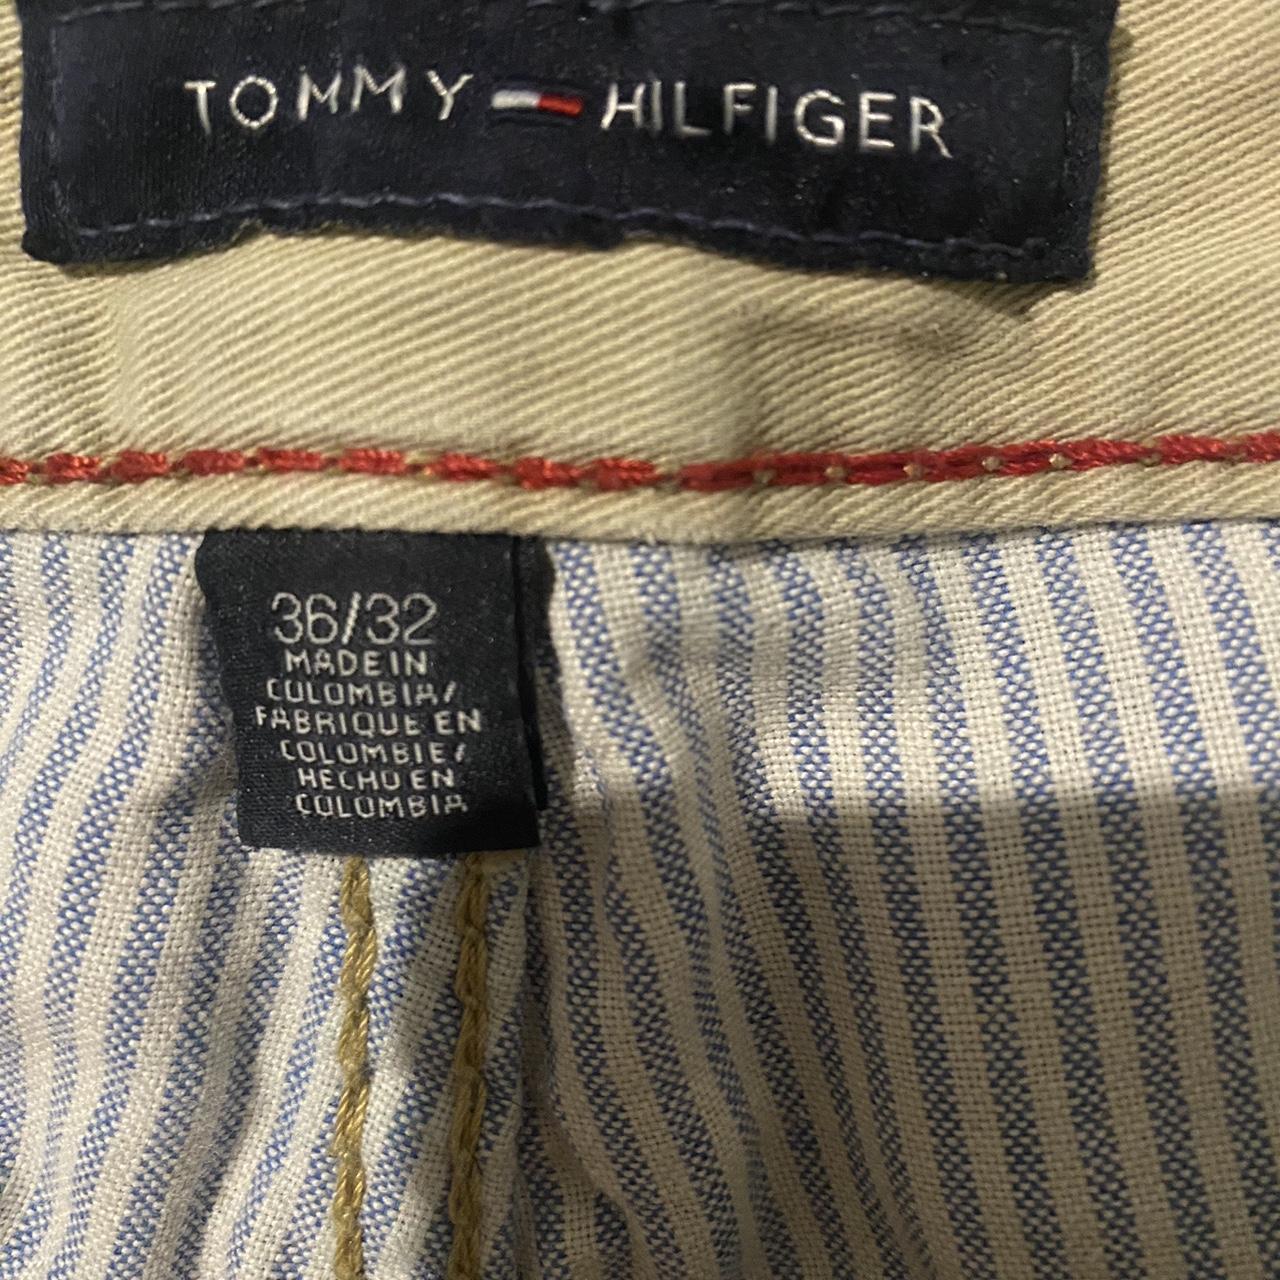 Clean pair of baggy Tommy Hilfiger jeans. Very cool... - Depop